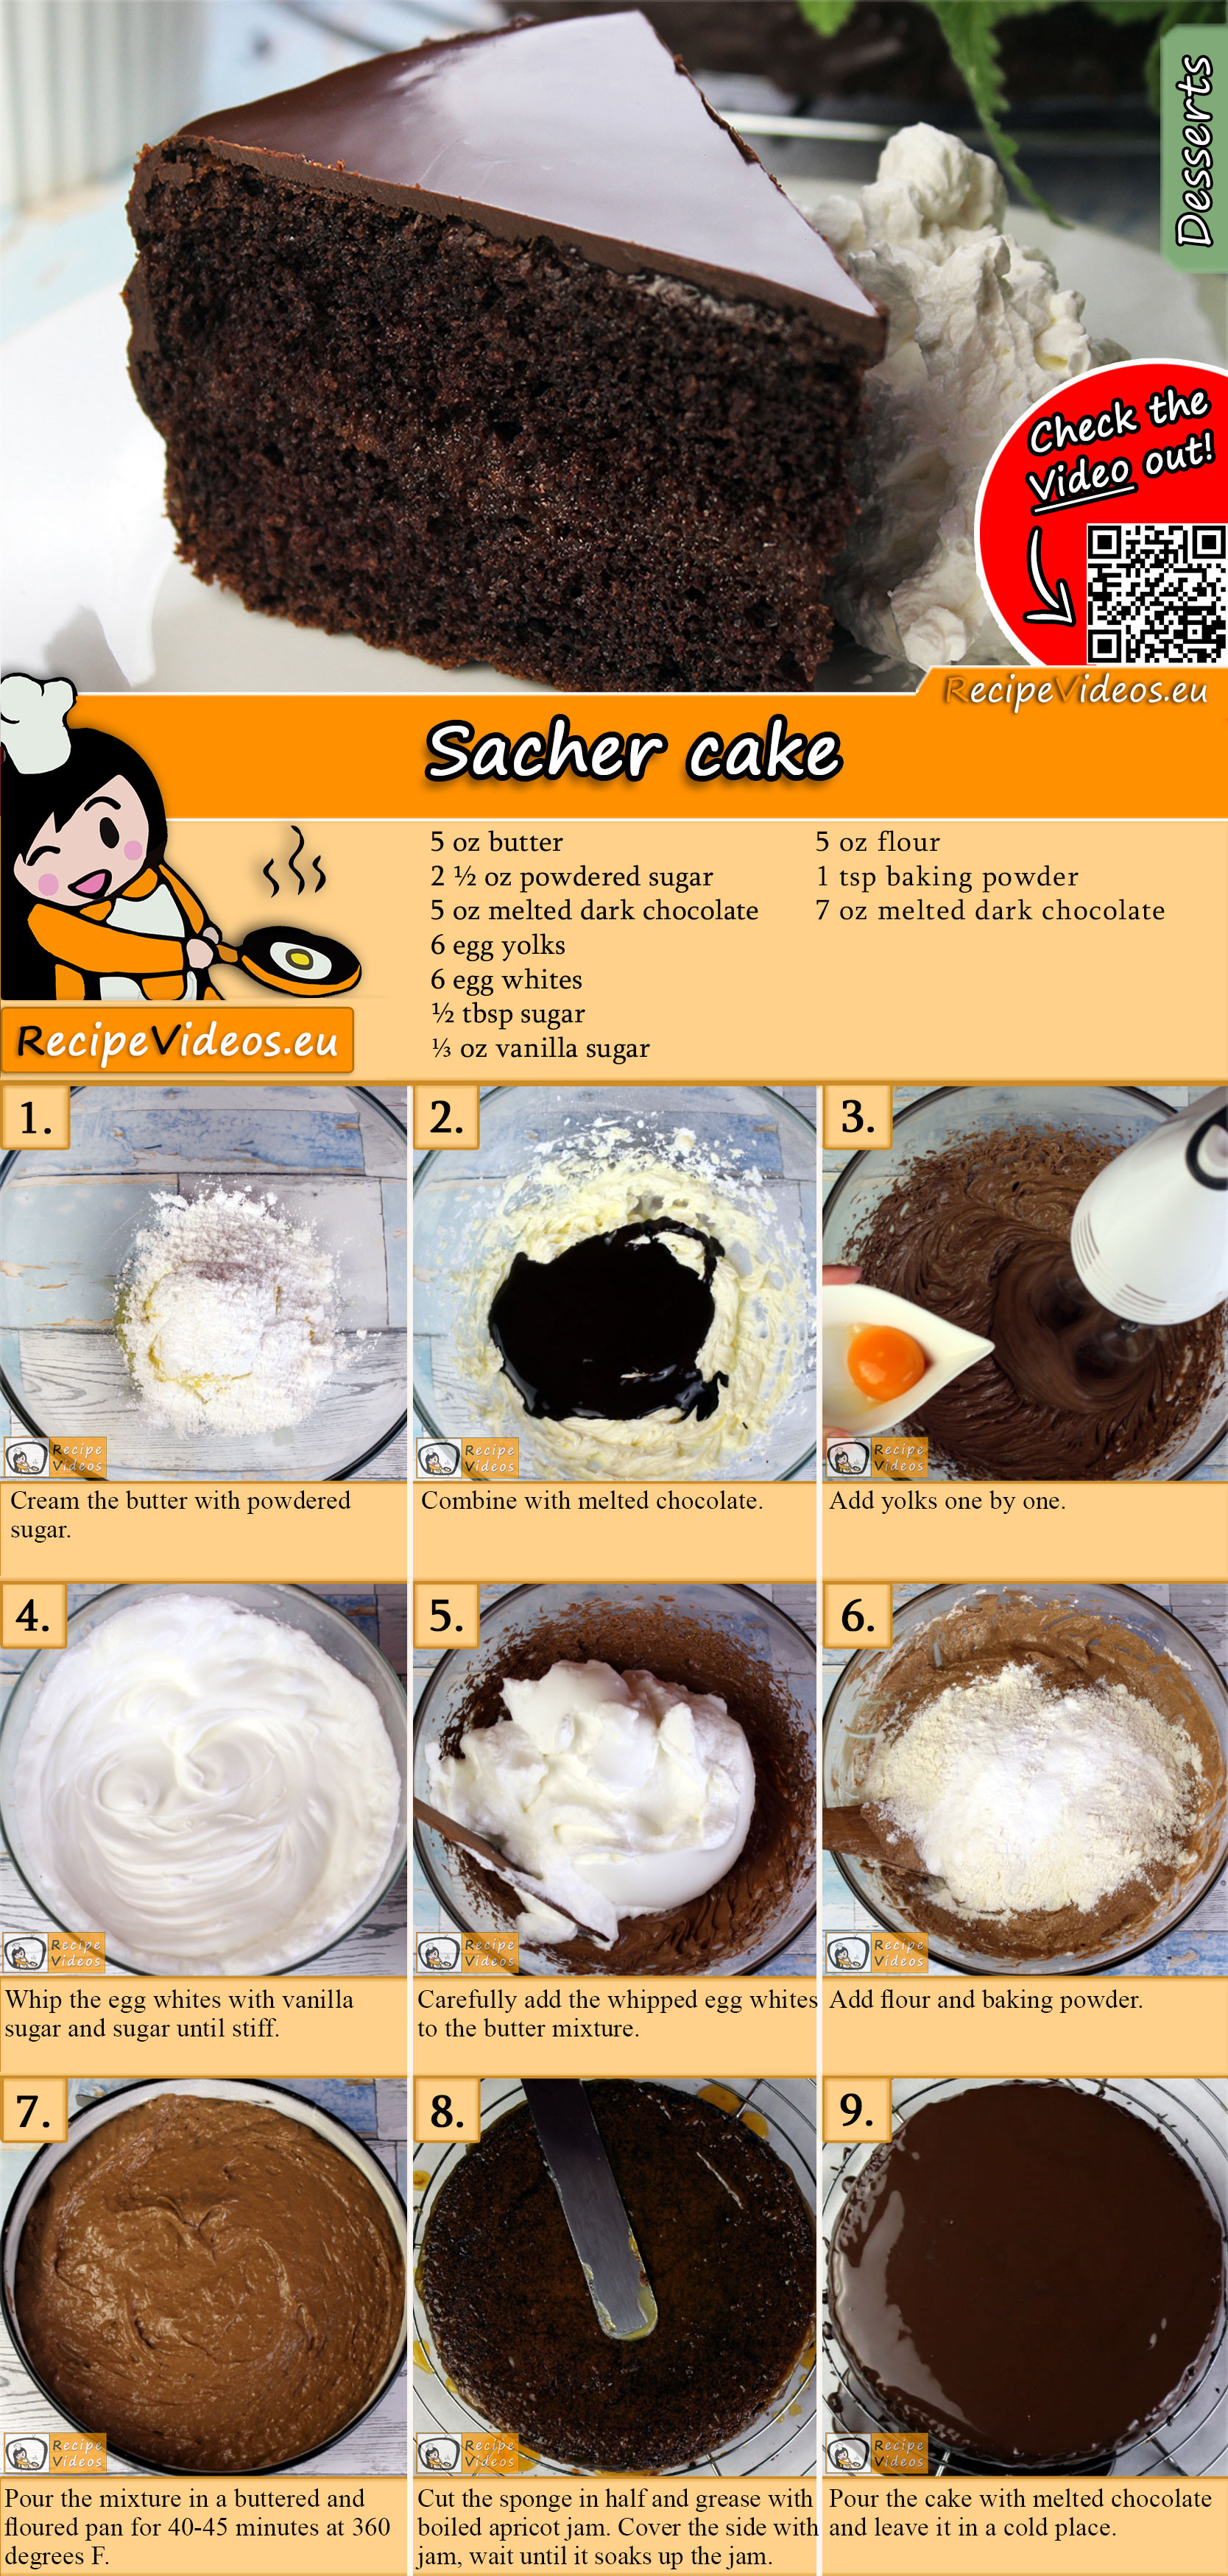 Sacher cake recipe with video